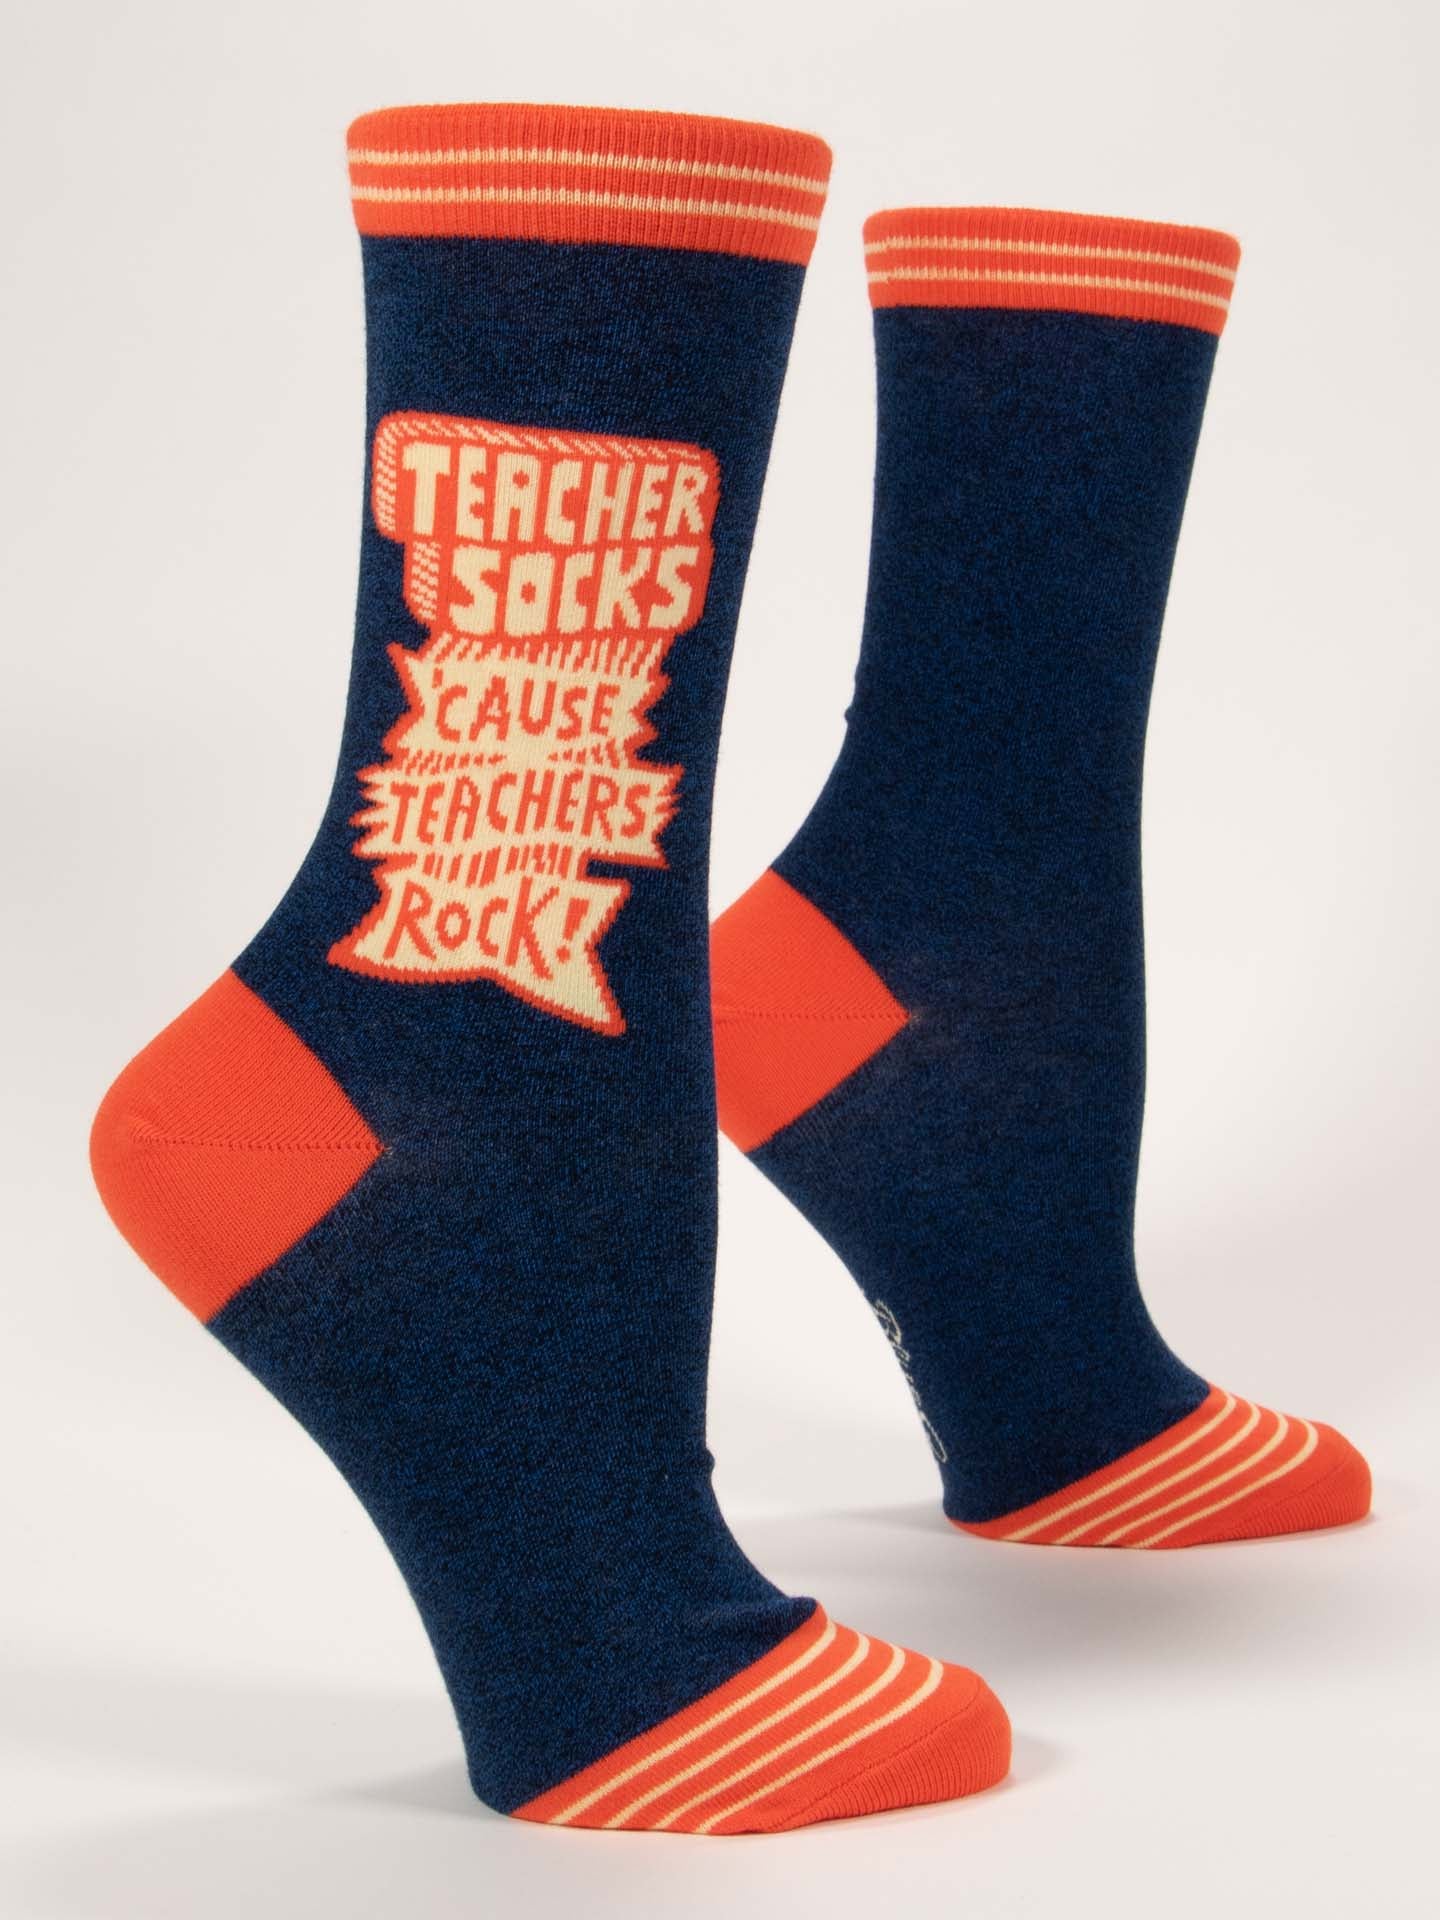 Blue Q - Teacher Socks 'Cause Teachers Rock Crew Socks